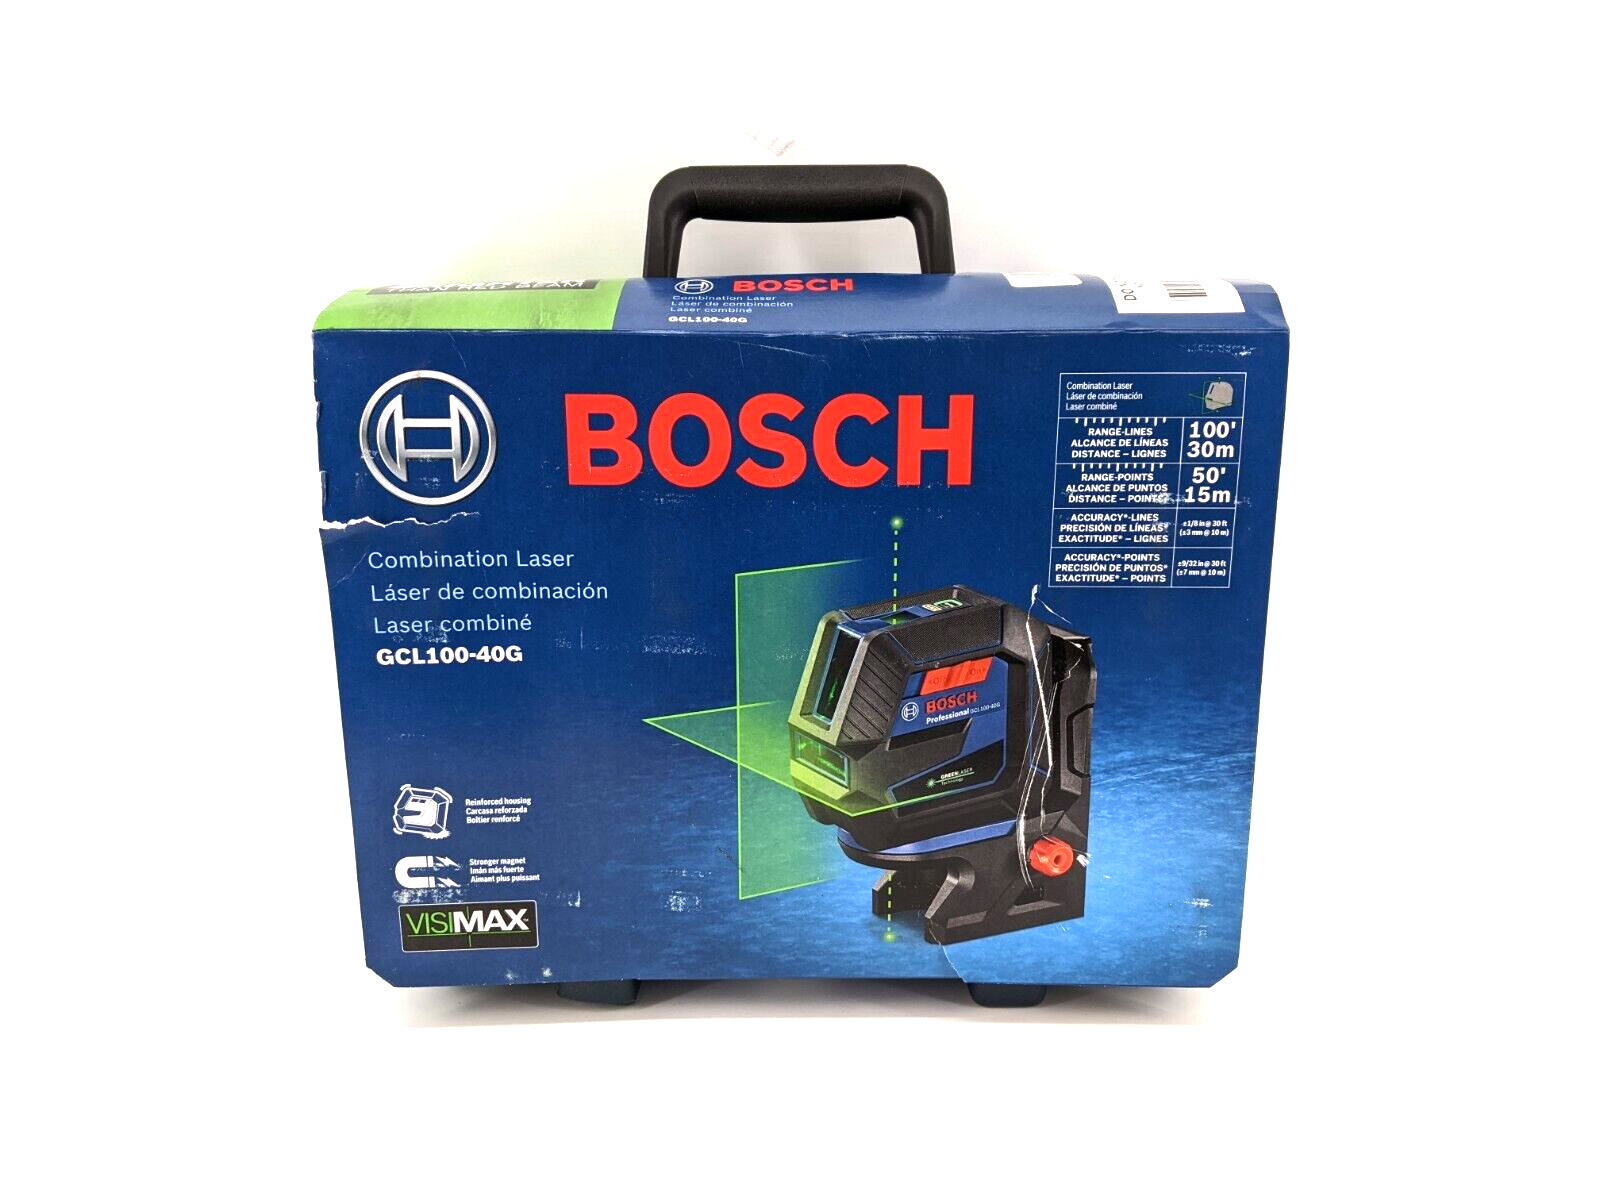 BOSCH GCL100-40G VISIMAX 100ft/30m Range Combination Laser Level